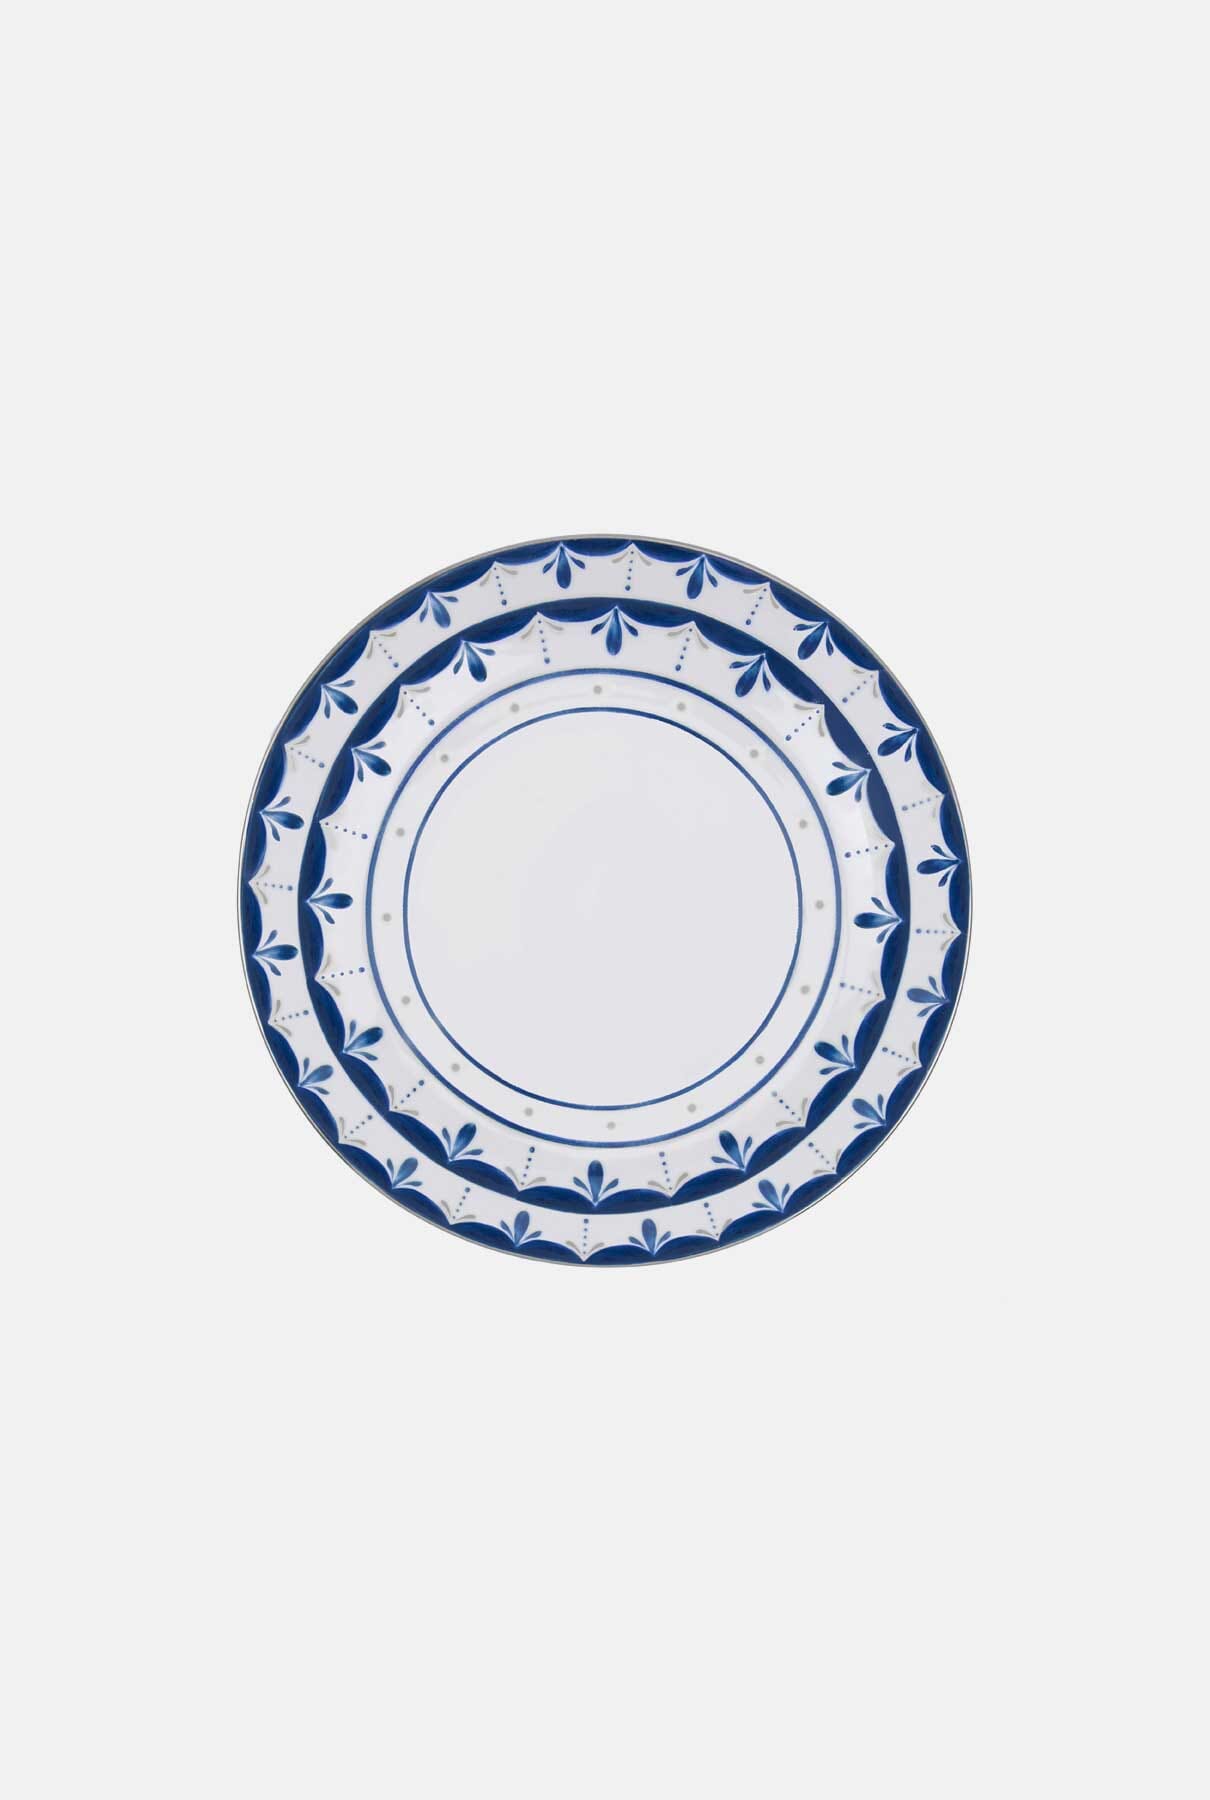 Plato llano Alhambra blue - 6 units Tableware Molecot 